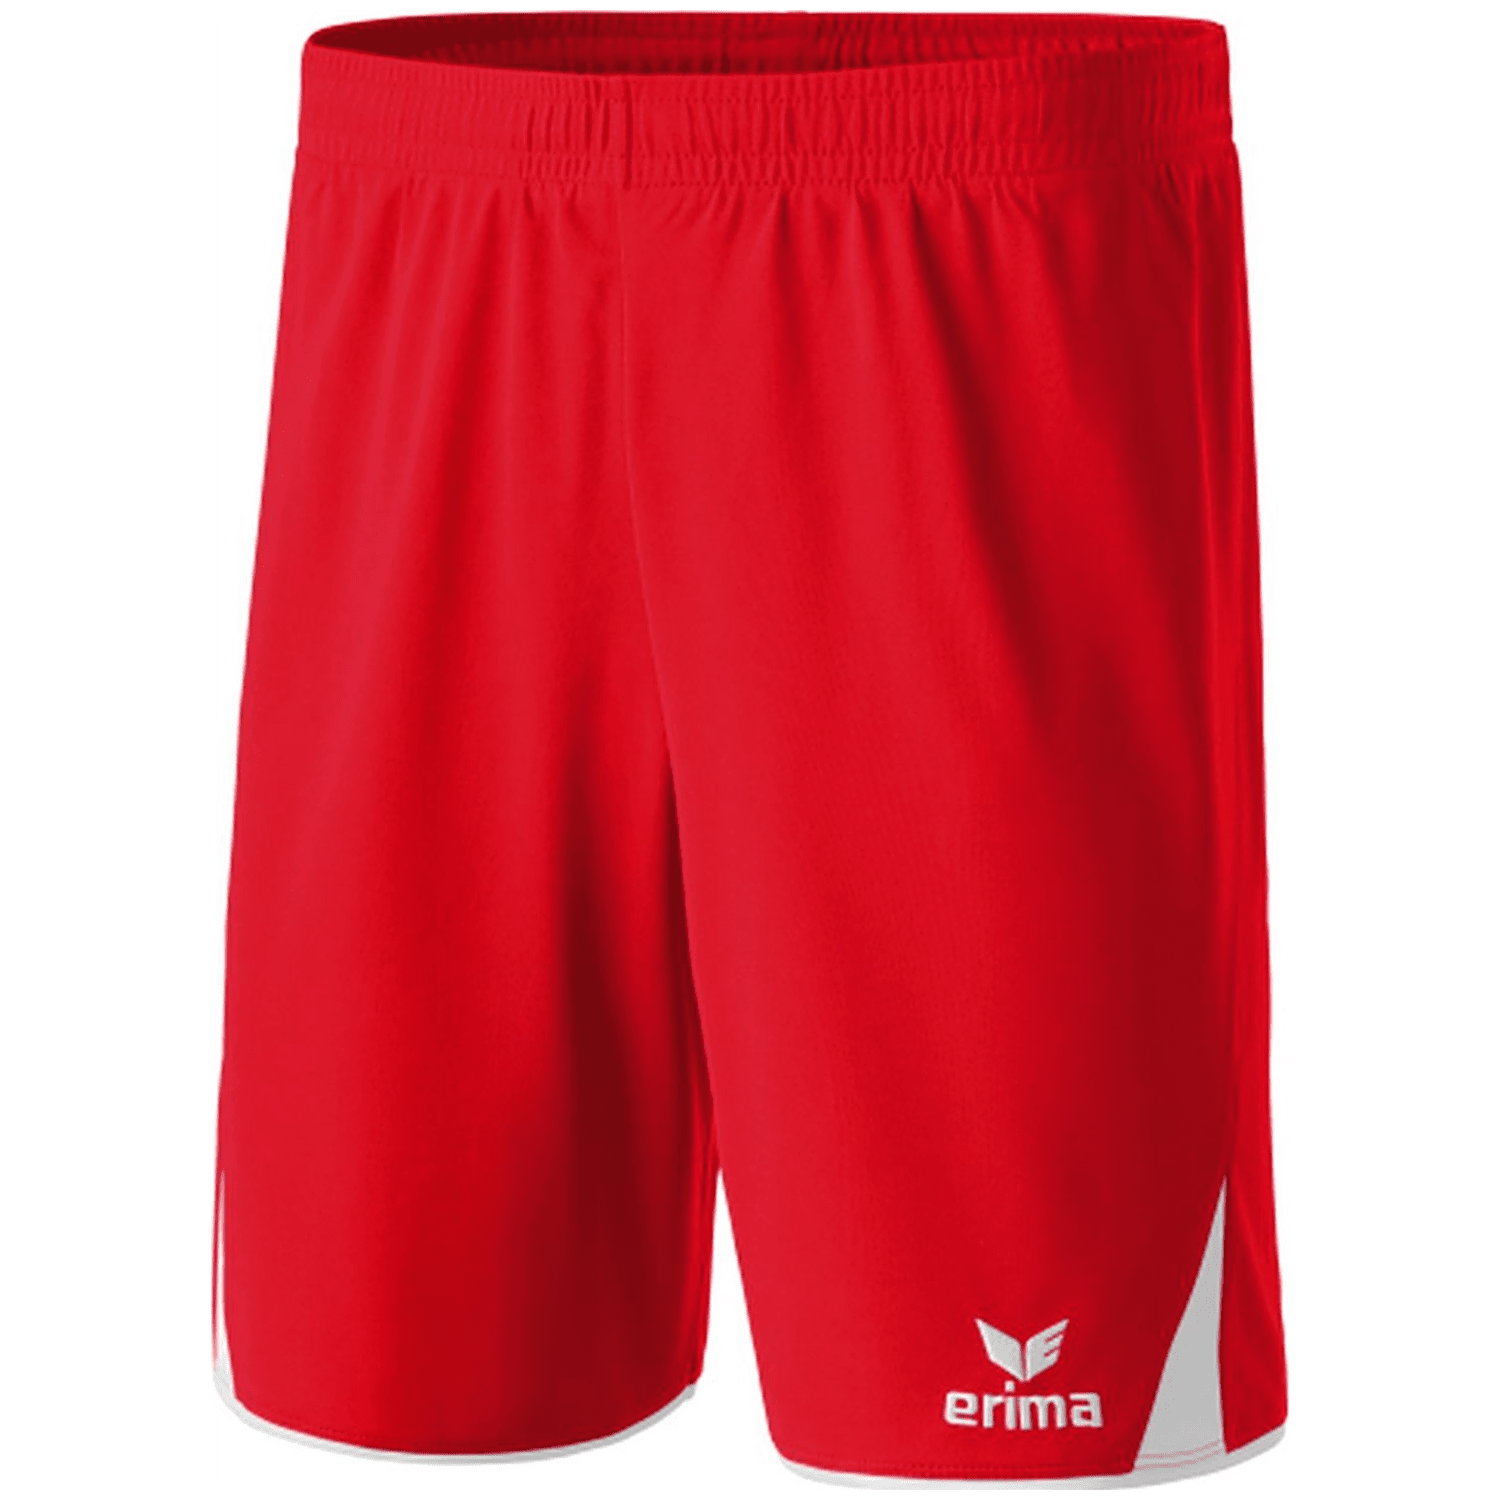 Erima Classic 5-C Kinder Shorts